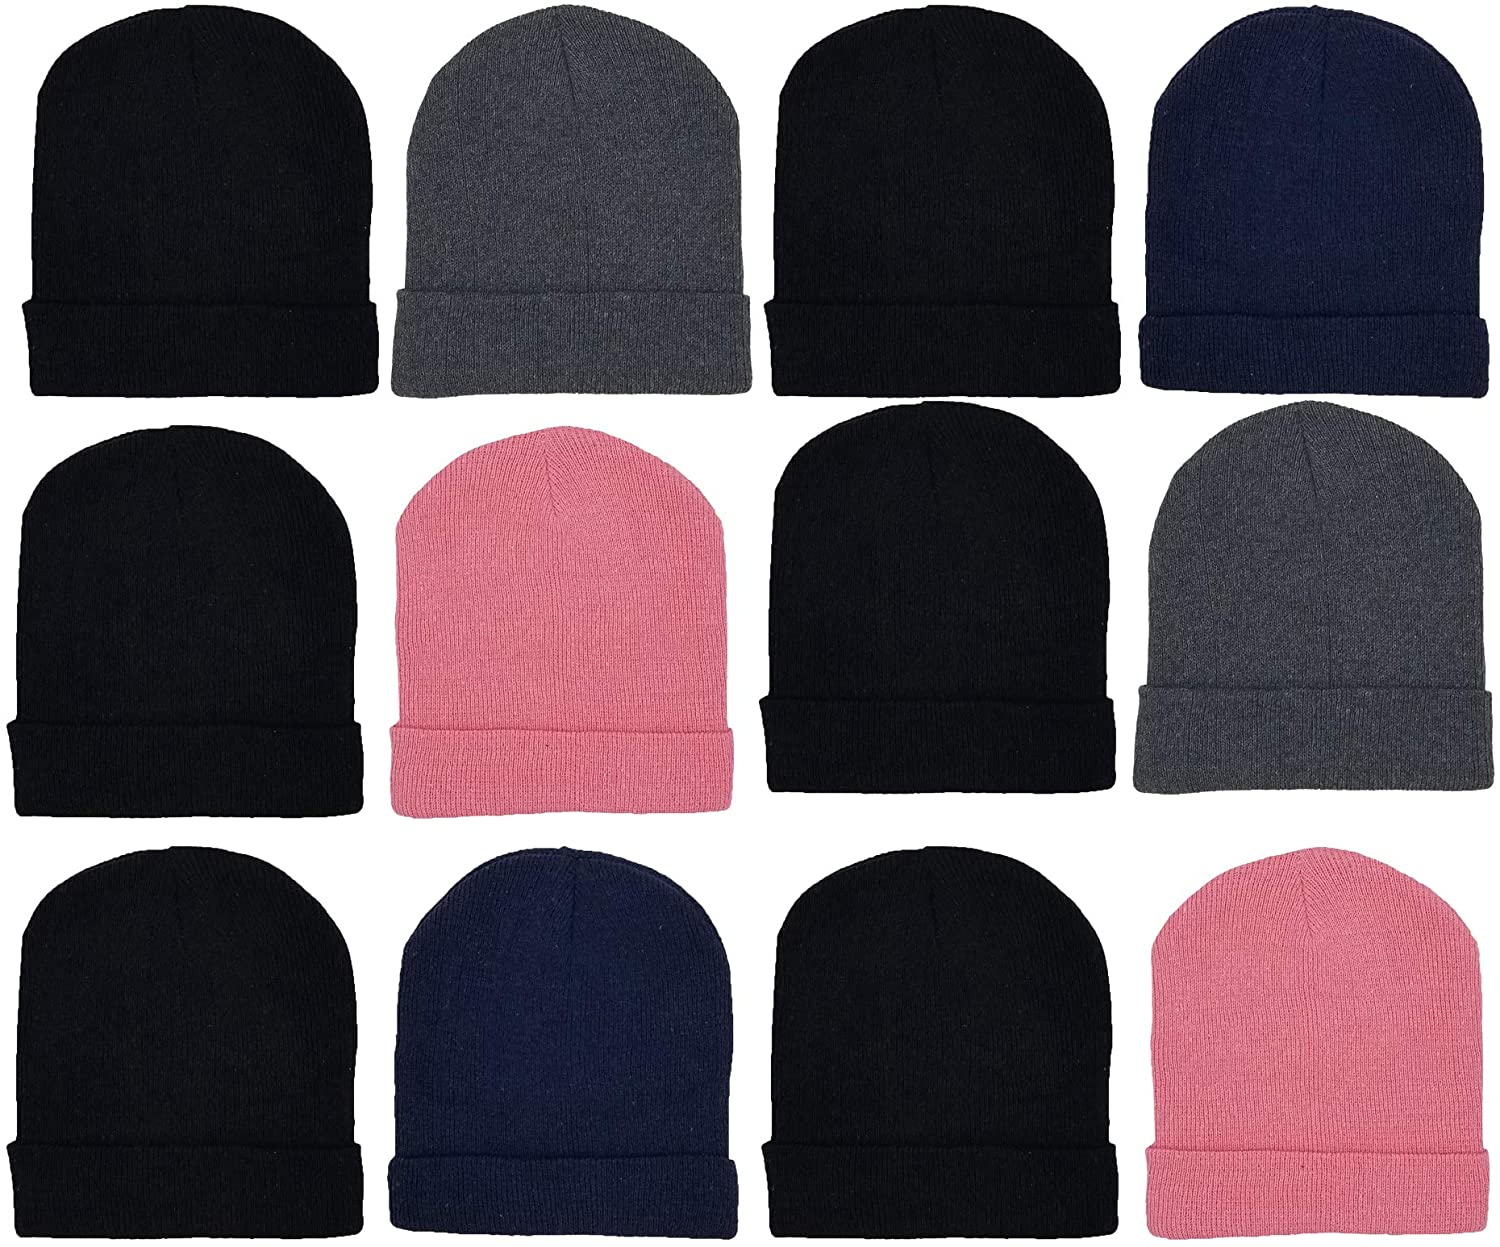 12 Pack Winter Beanie Hats for Men Women, Warm Cozy Knitted Cuffed Skull  Cap, Wh | eBay